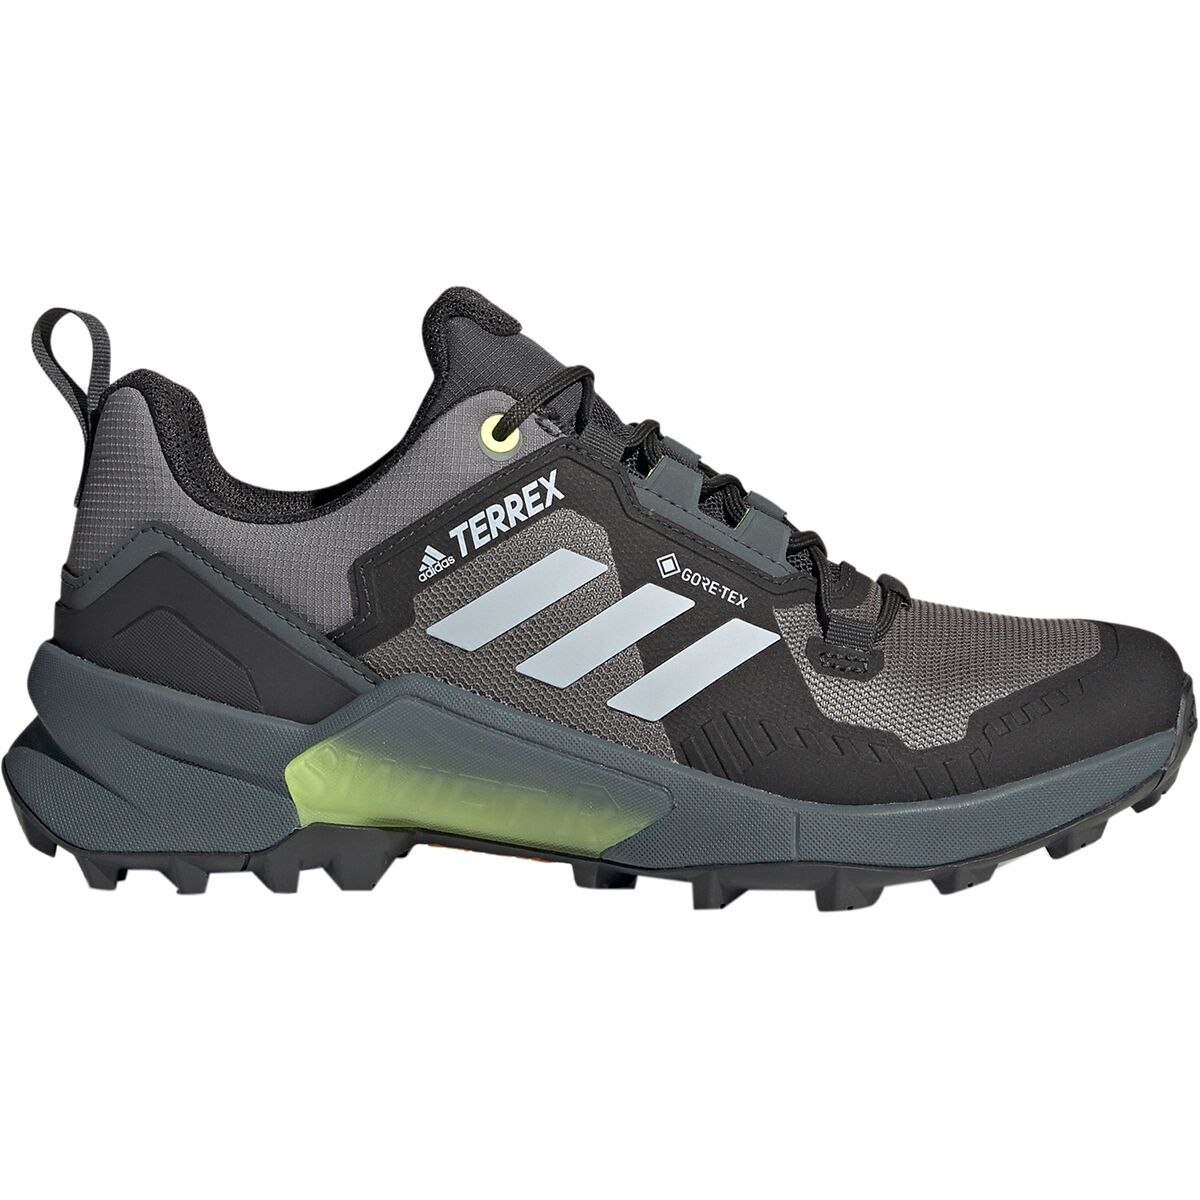 Adidas Outdoor Terrex Swift R3 GTX Hiking Shoe - Women's